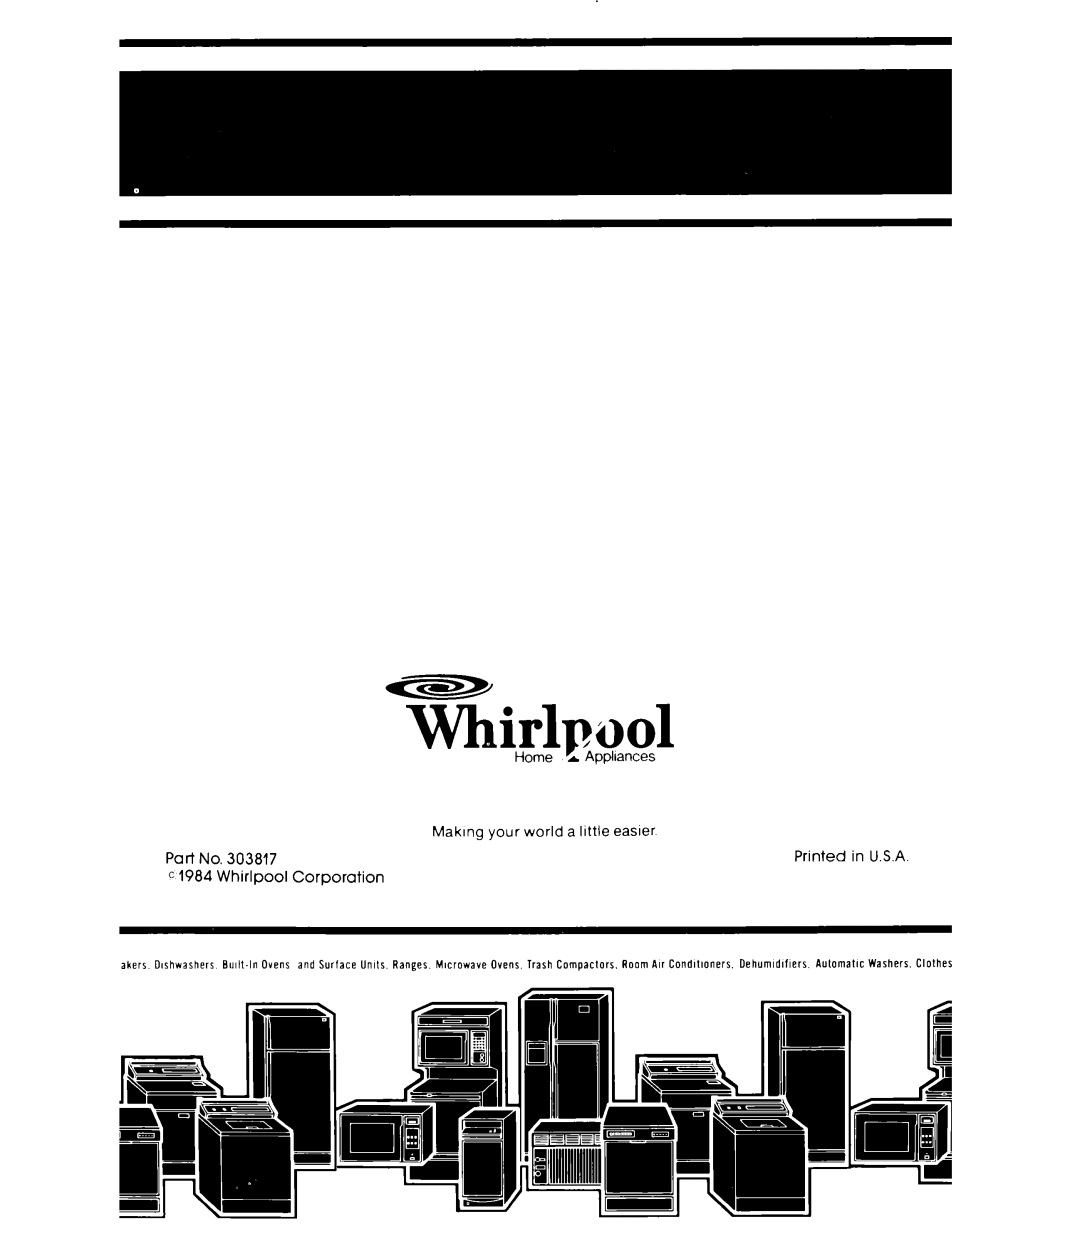 Whirlpool DU9903XL manual c 1984 Whirlpool Corporation, Apphances 